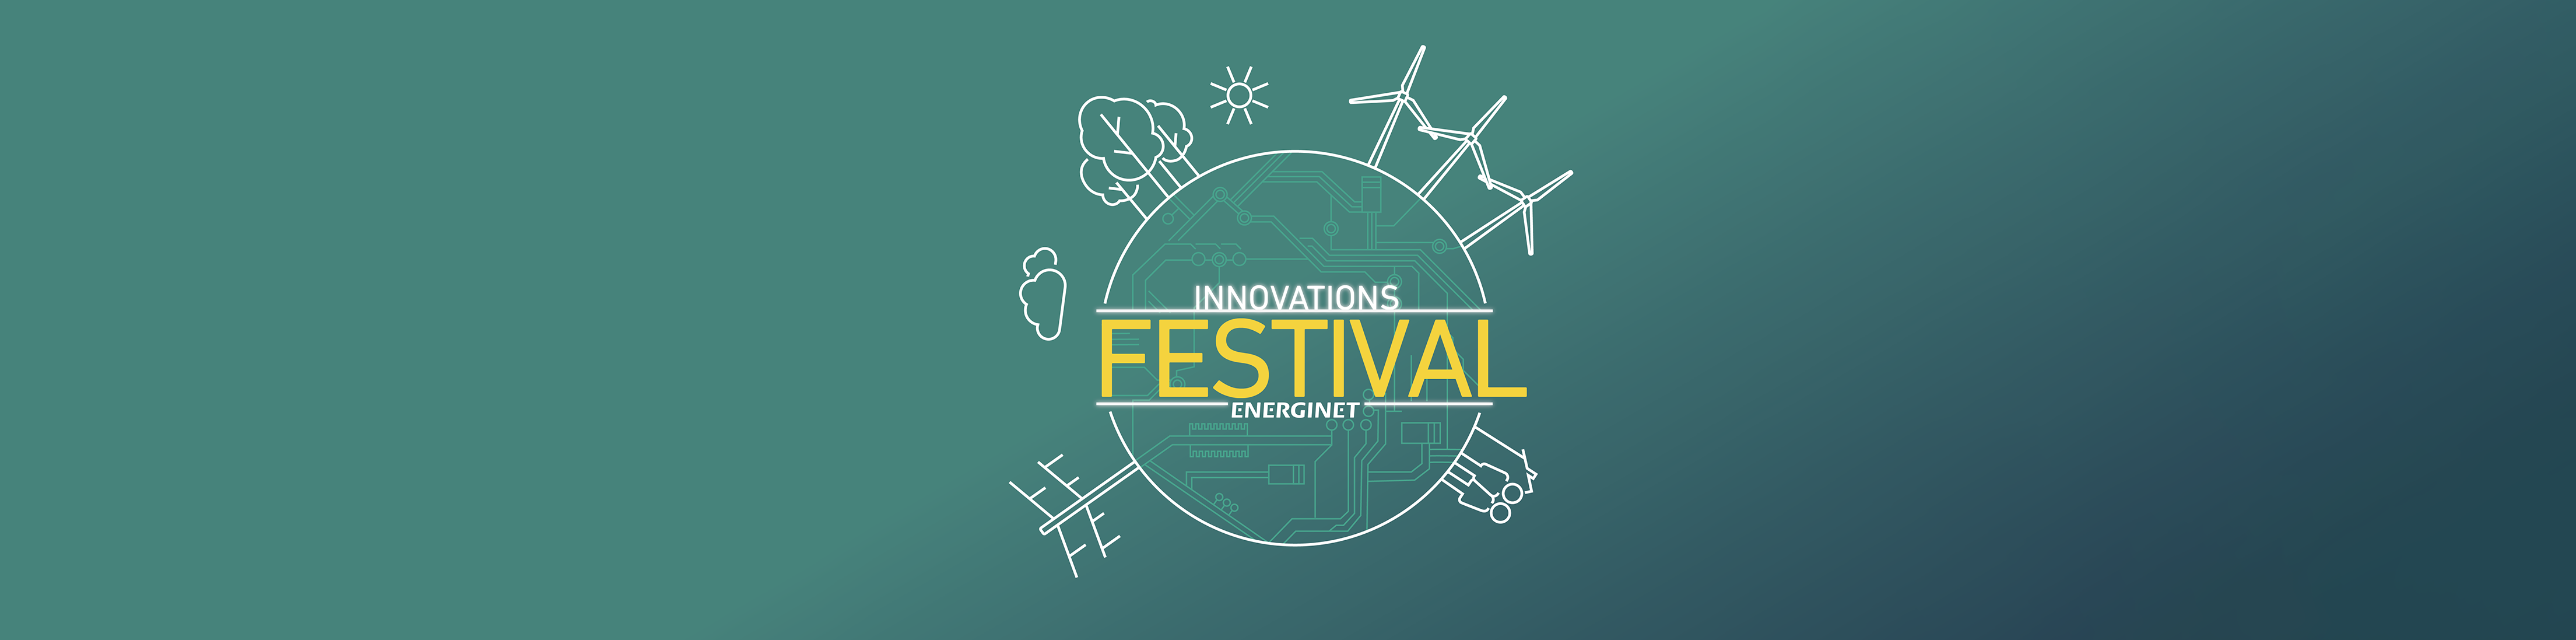 Innovationsfestival banner